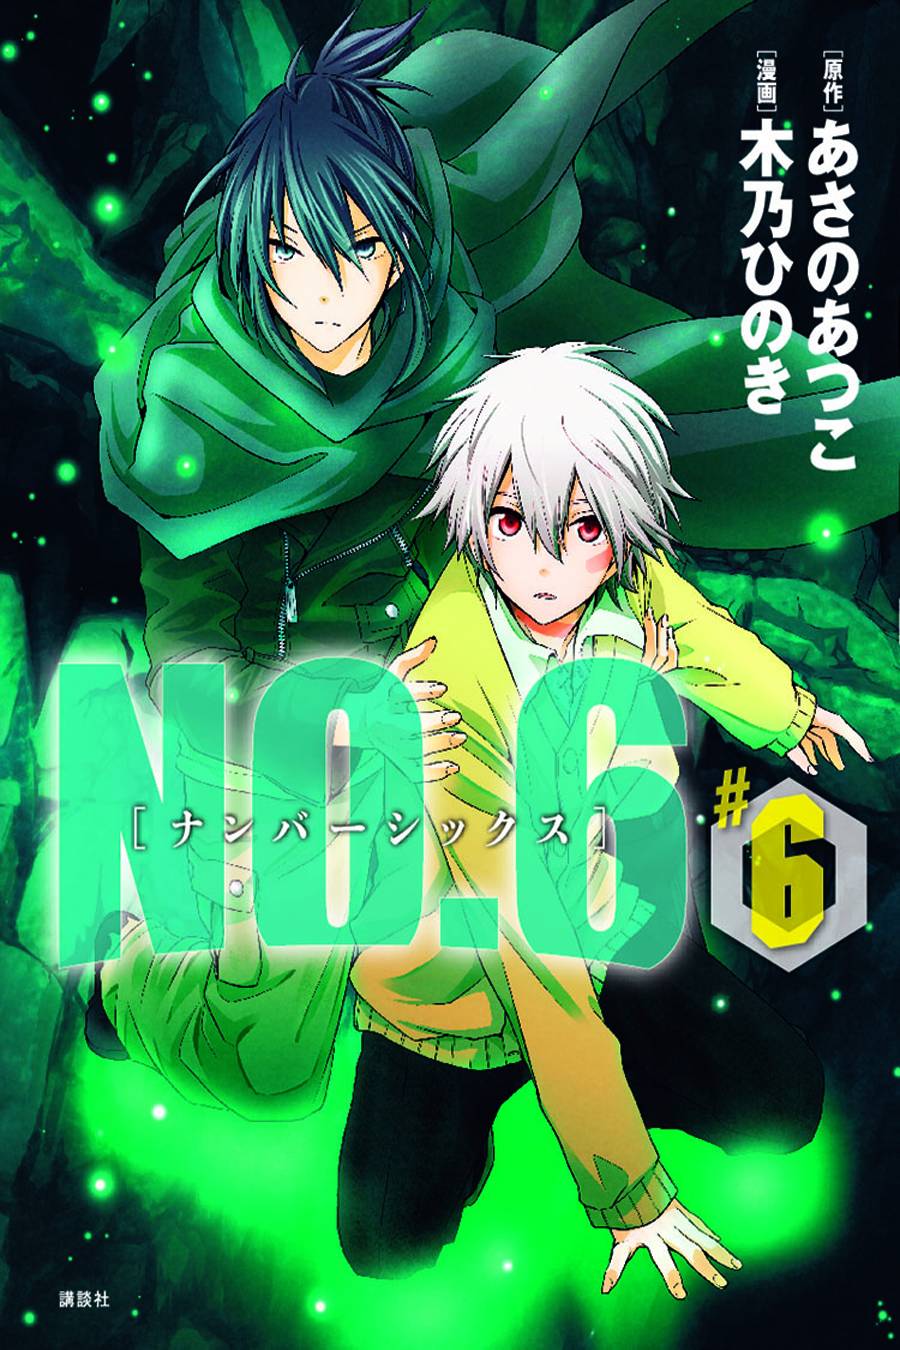 No 6 Manga Volume 6